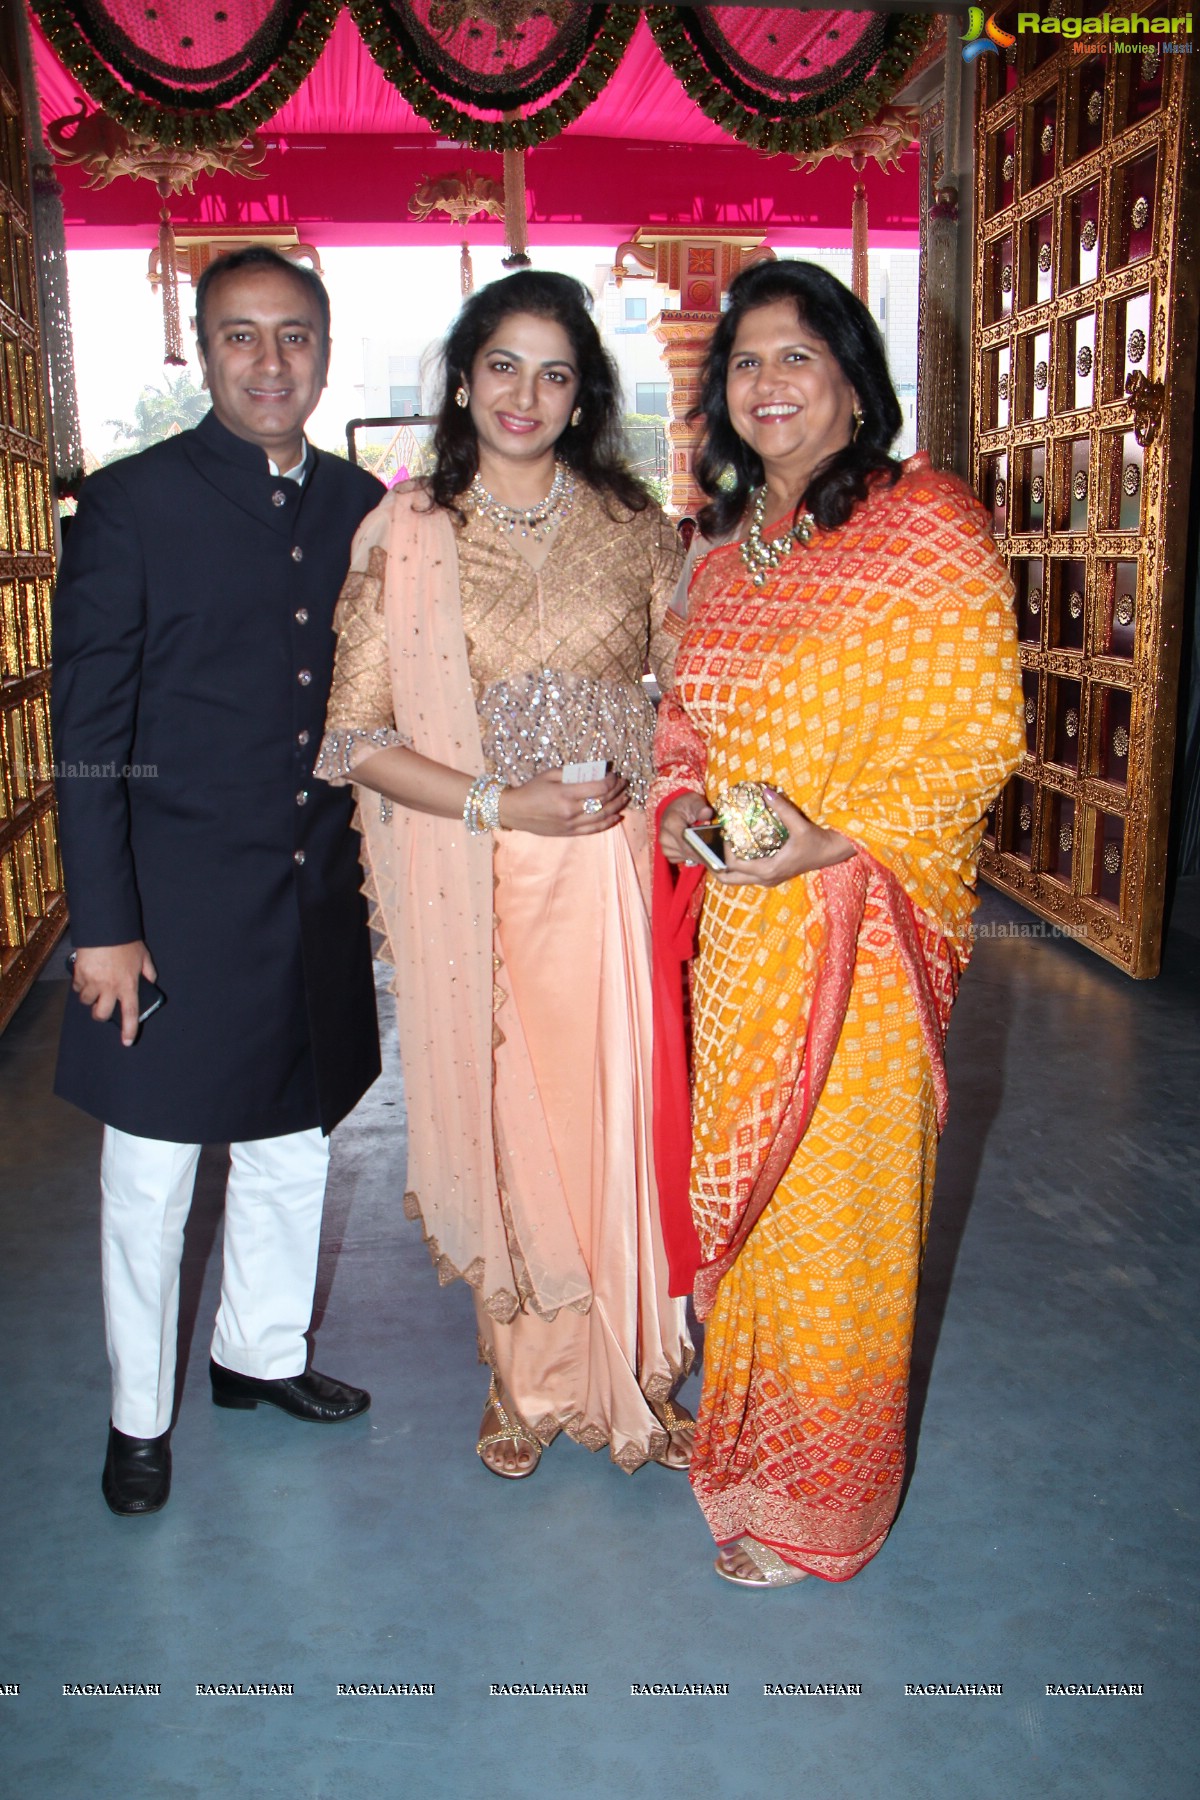 Grand Wedding of Keshav Reddy with Veena Reddy at GMR Grounds, Hyderabad